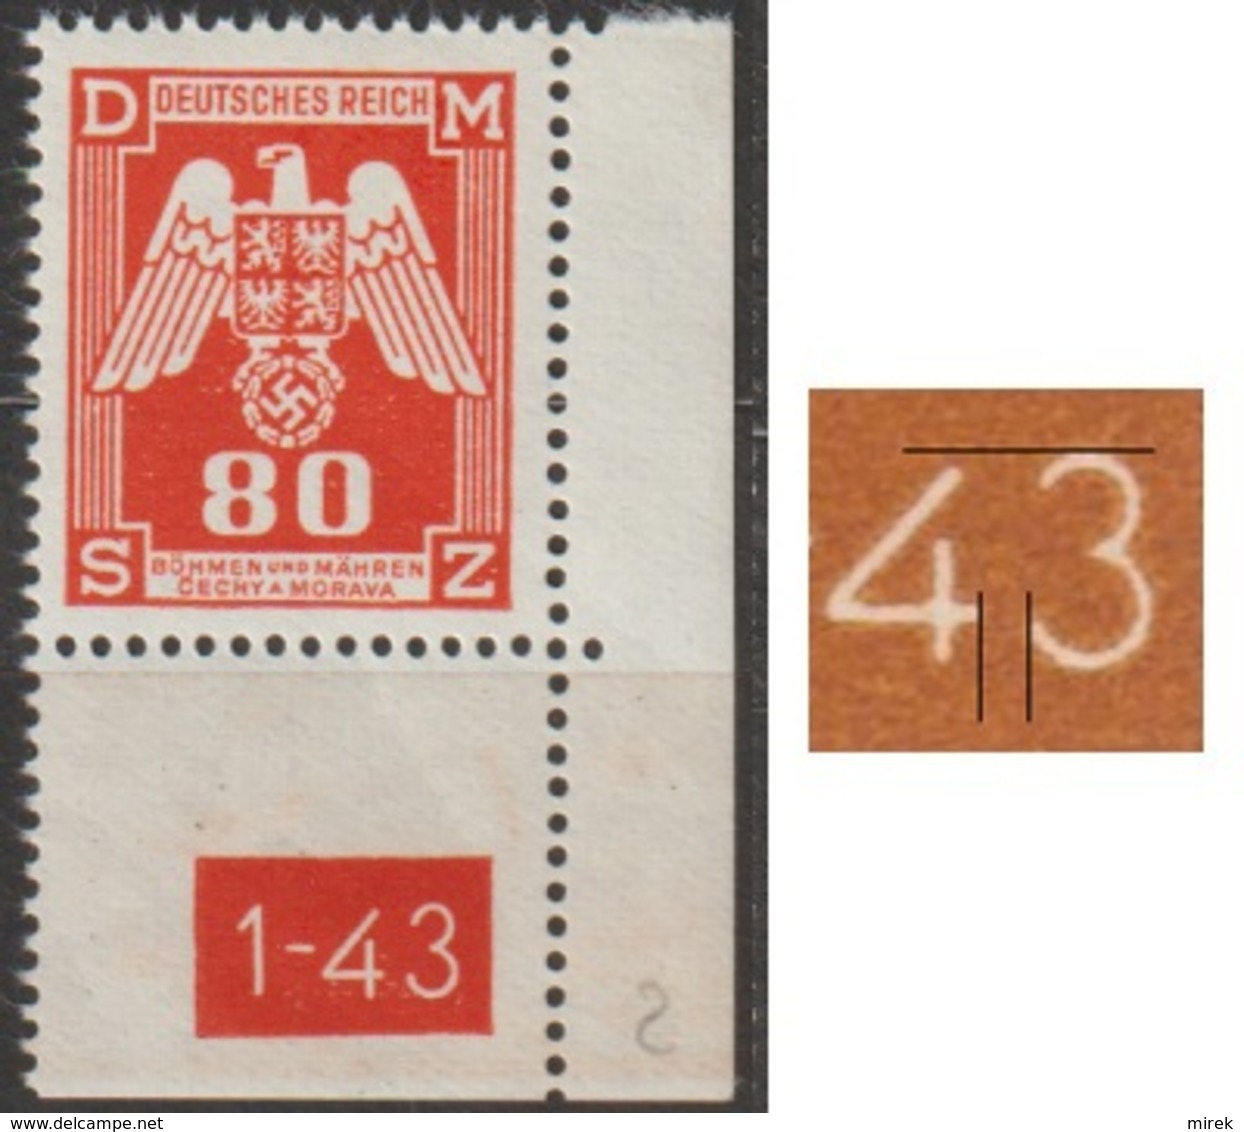 82/ Bohemia & Moravia - Service Stamps; ** Nr. SL 17; Corner Stamp, 2nd Issue, Printing Plate 2, Number 1-43 - Unused Stamps